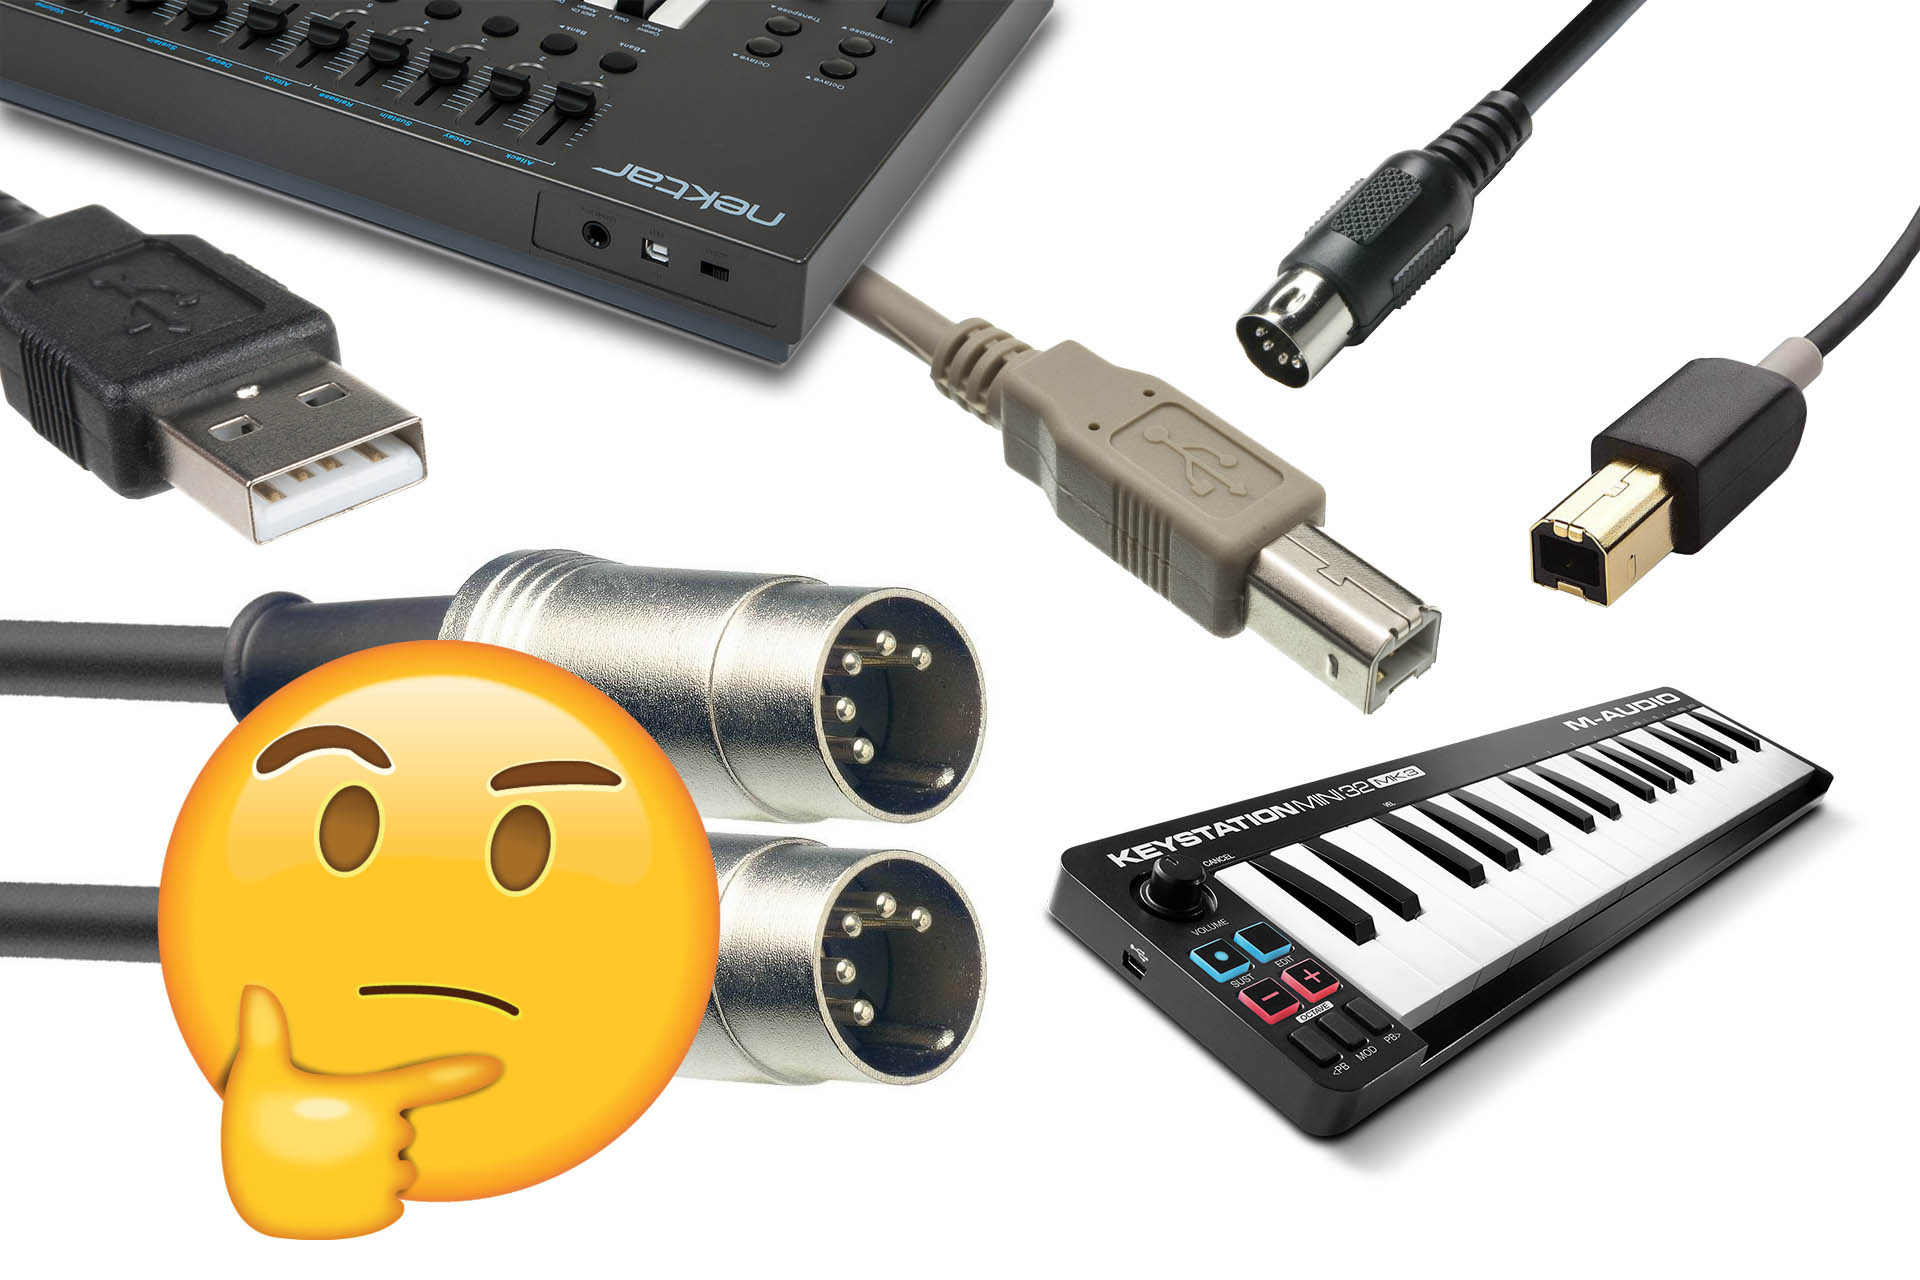 USB MIDI KEYBOARD TO MIDI – HOW TO